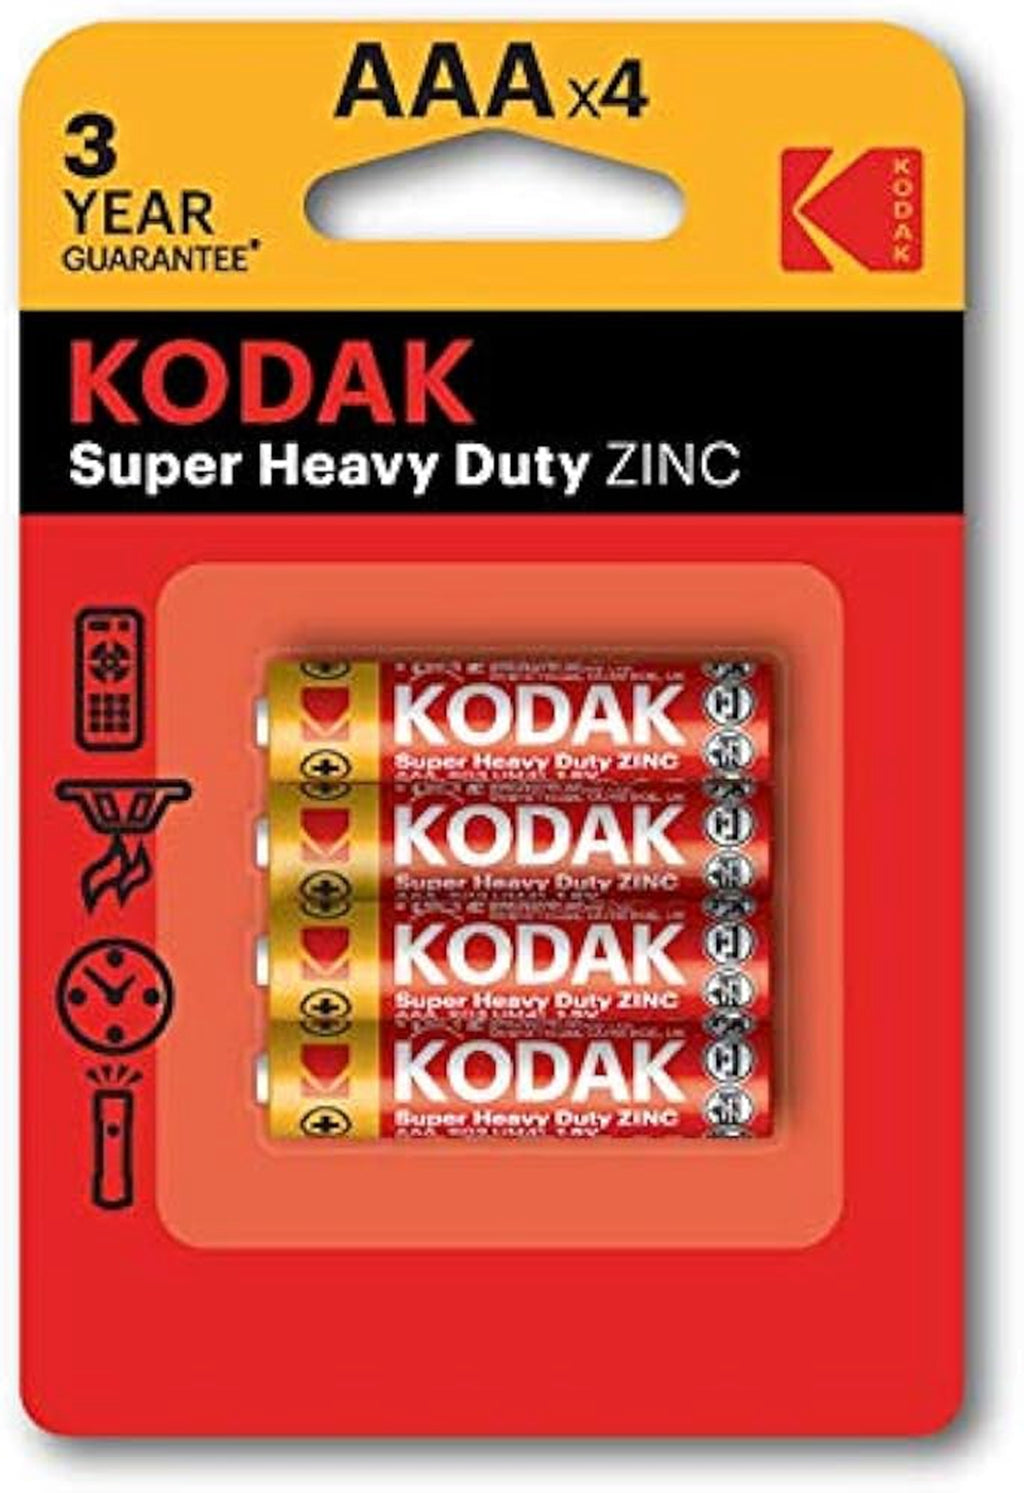 Kodak Extra Heavy Duty Zinc batería, AAA , 1,5V, pack de 4